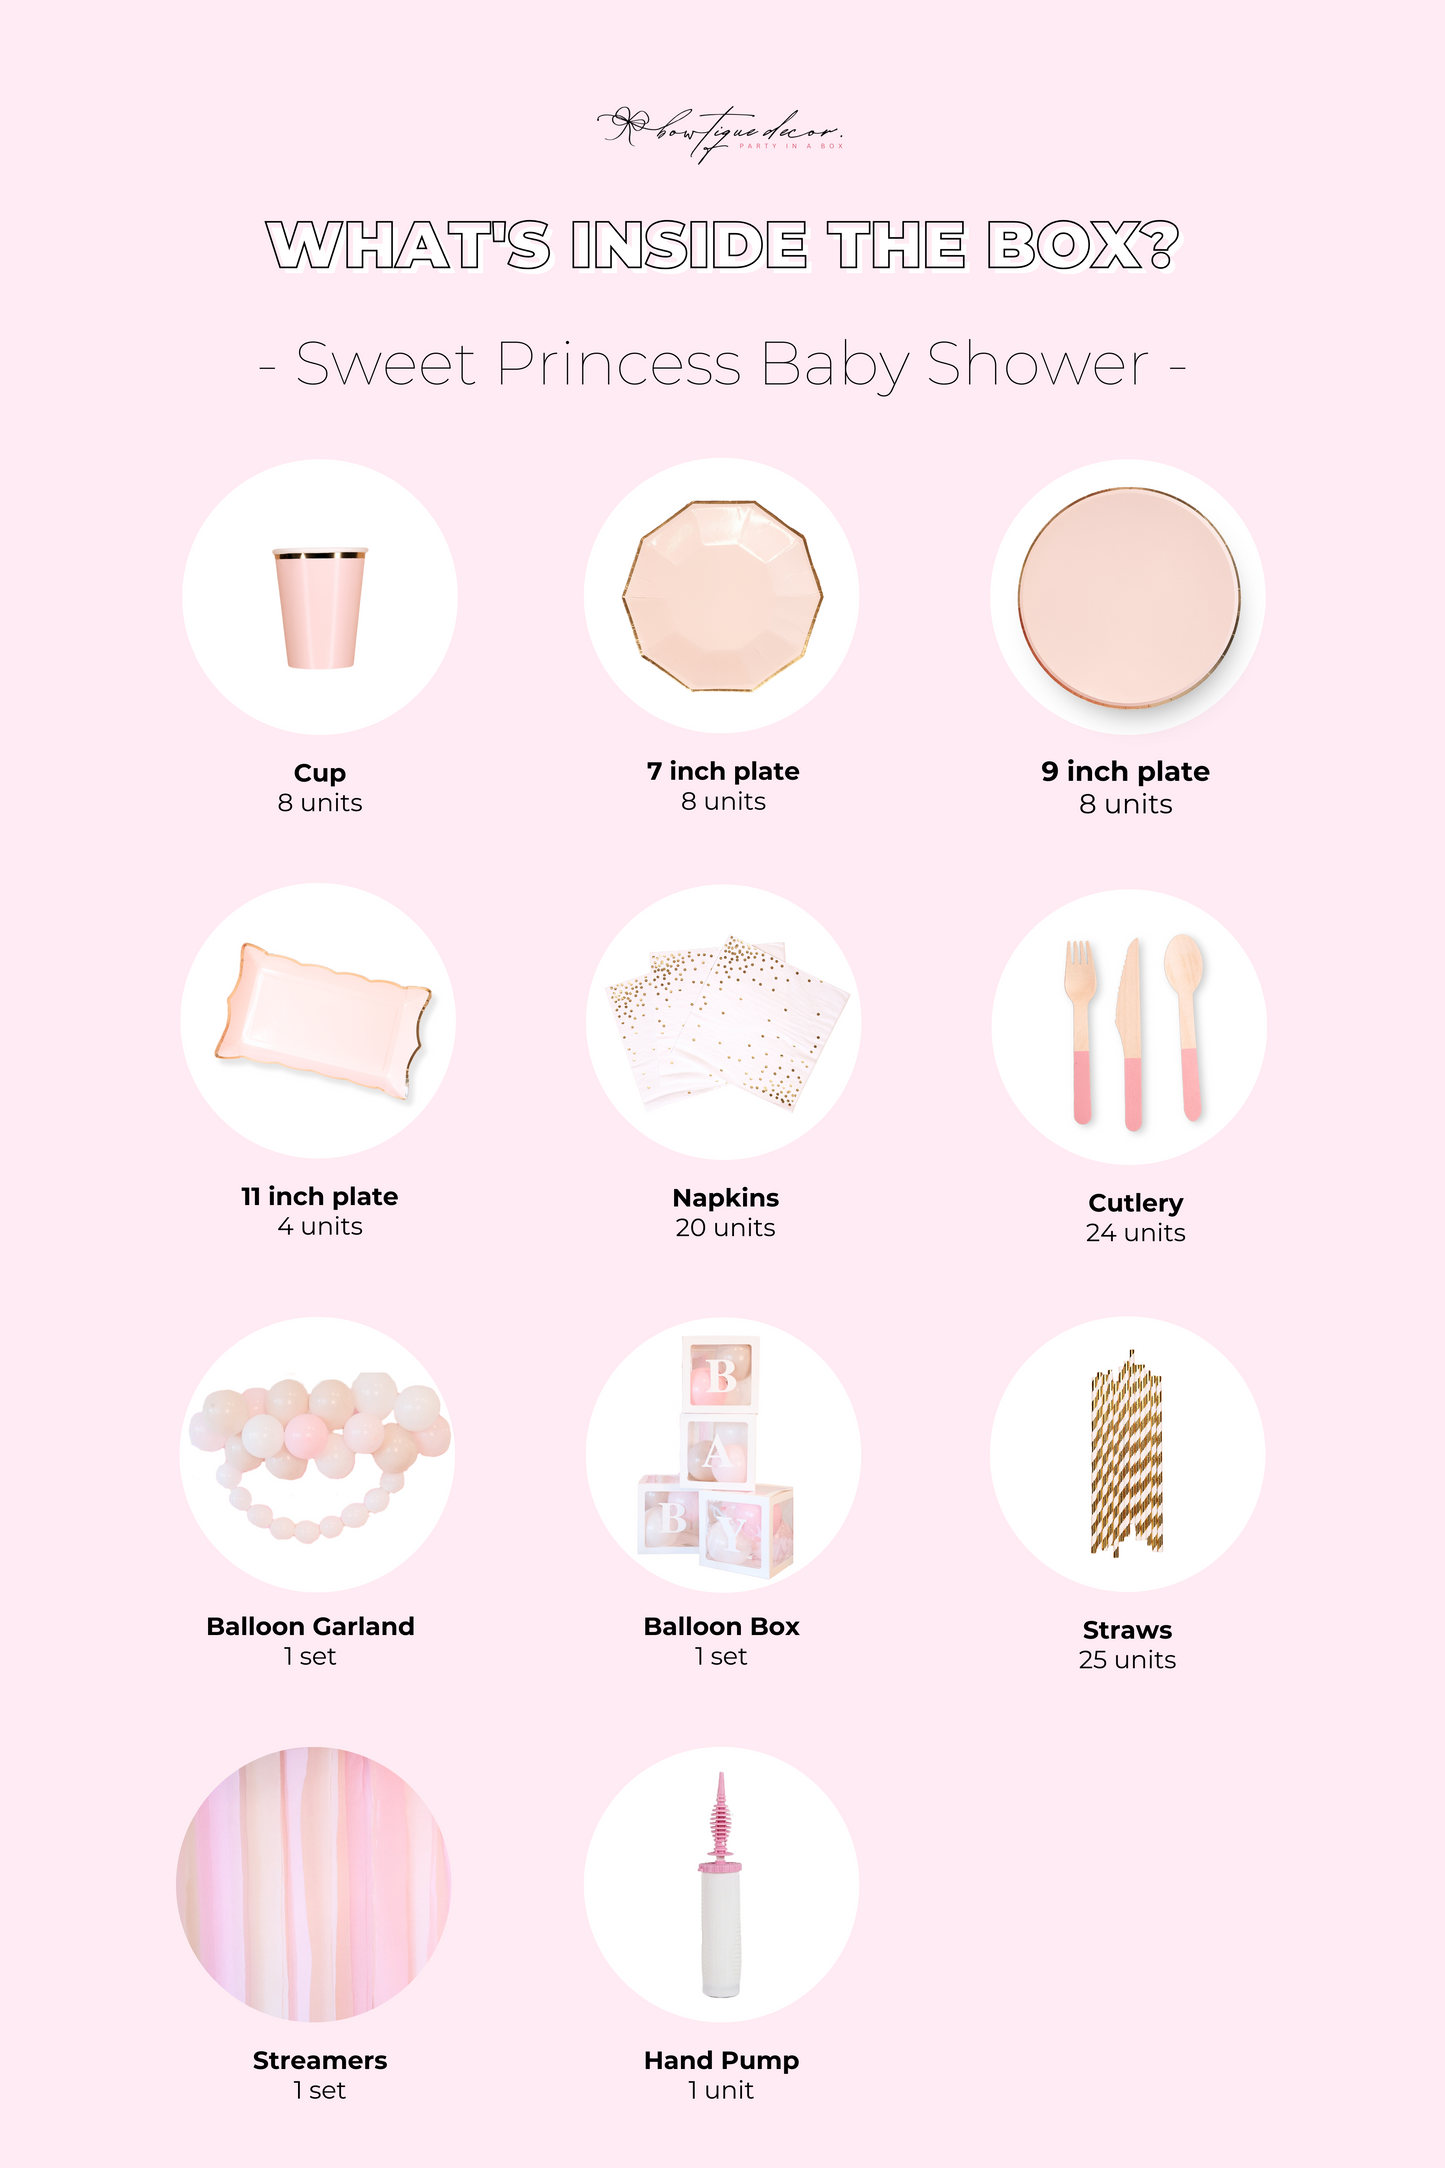 Sweet Princess Baby Shower